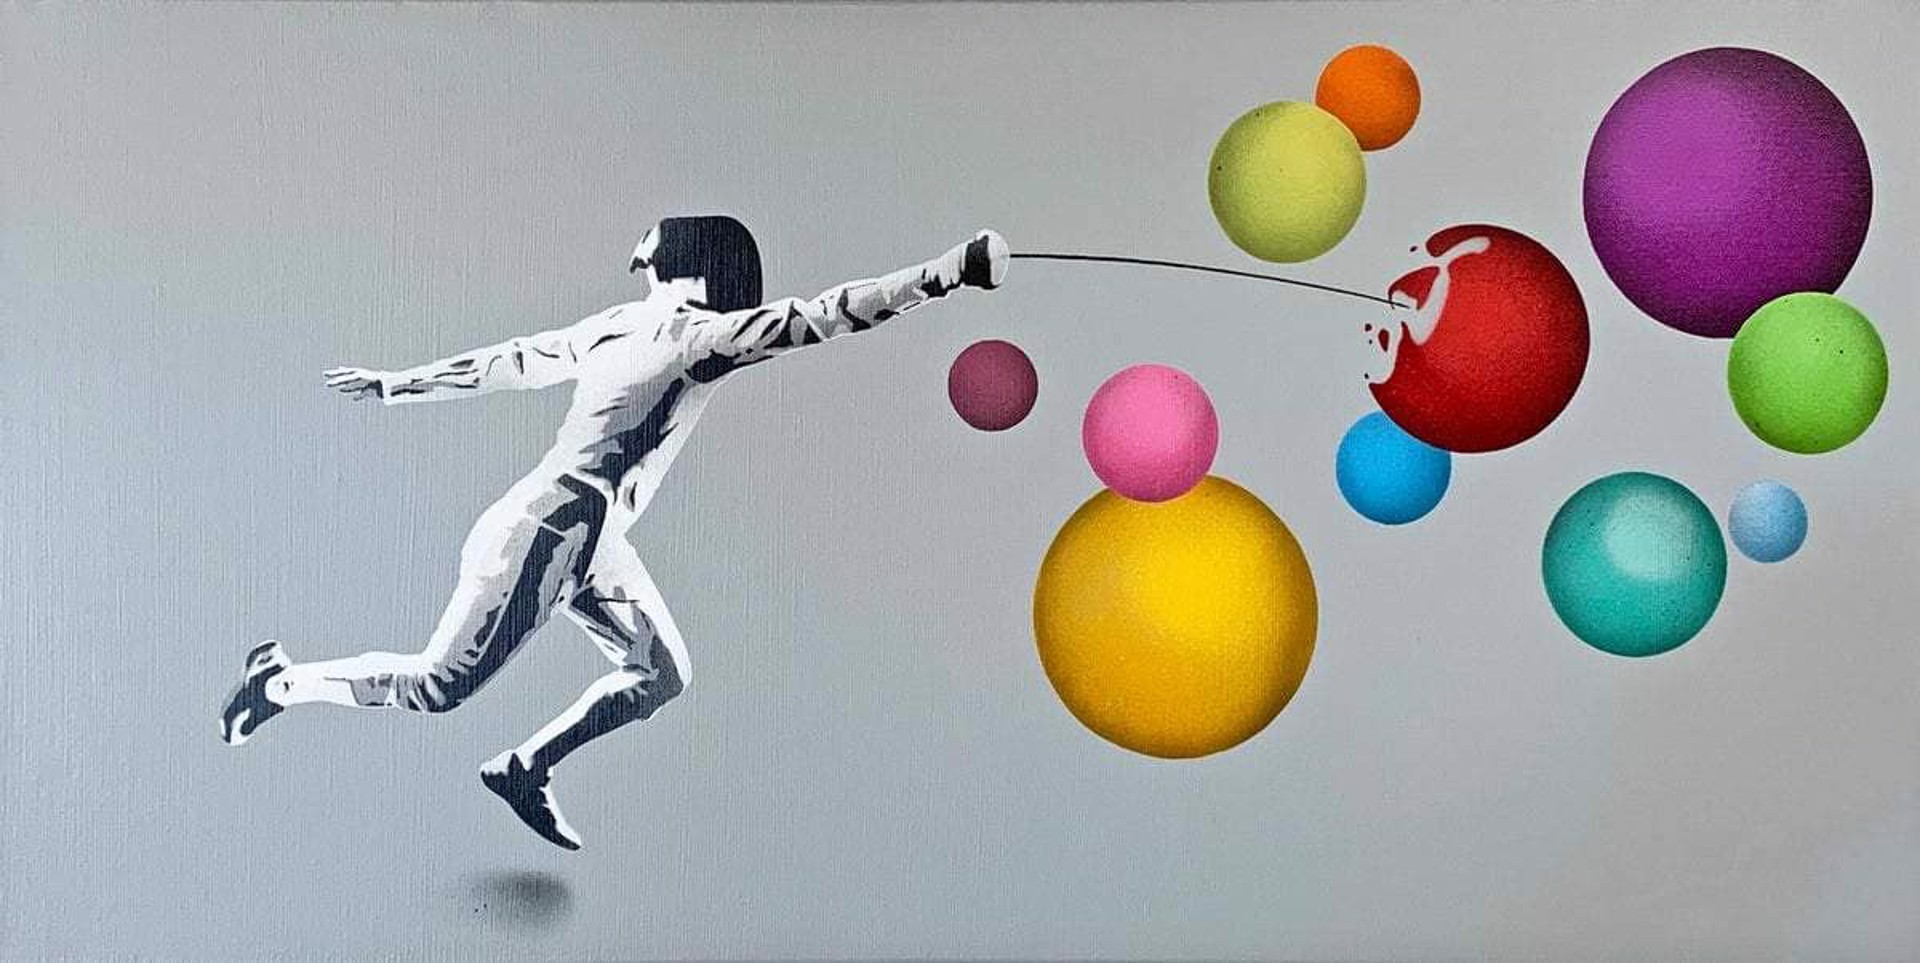 Fencer Vs. Bubbles by Kunstrasen